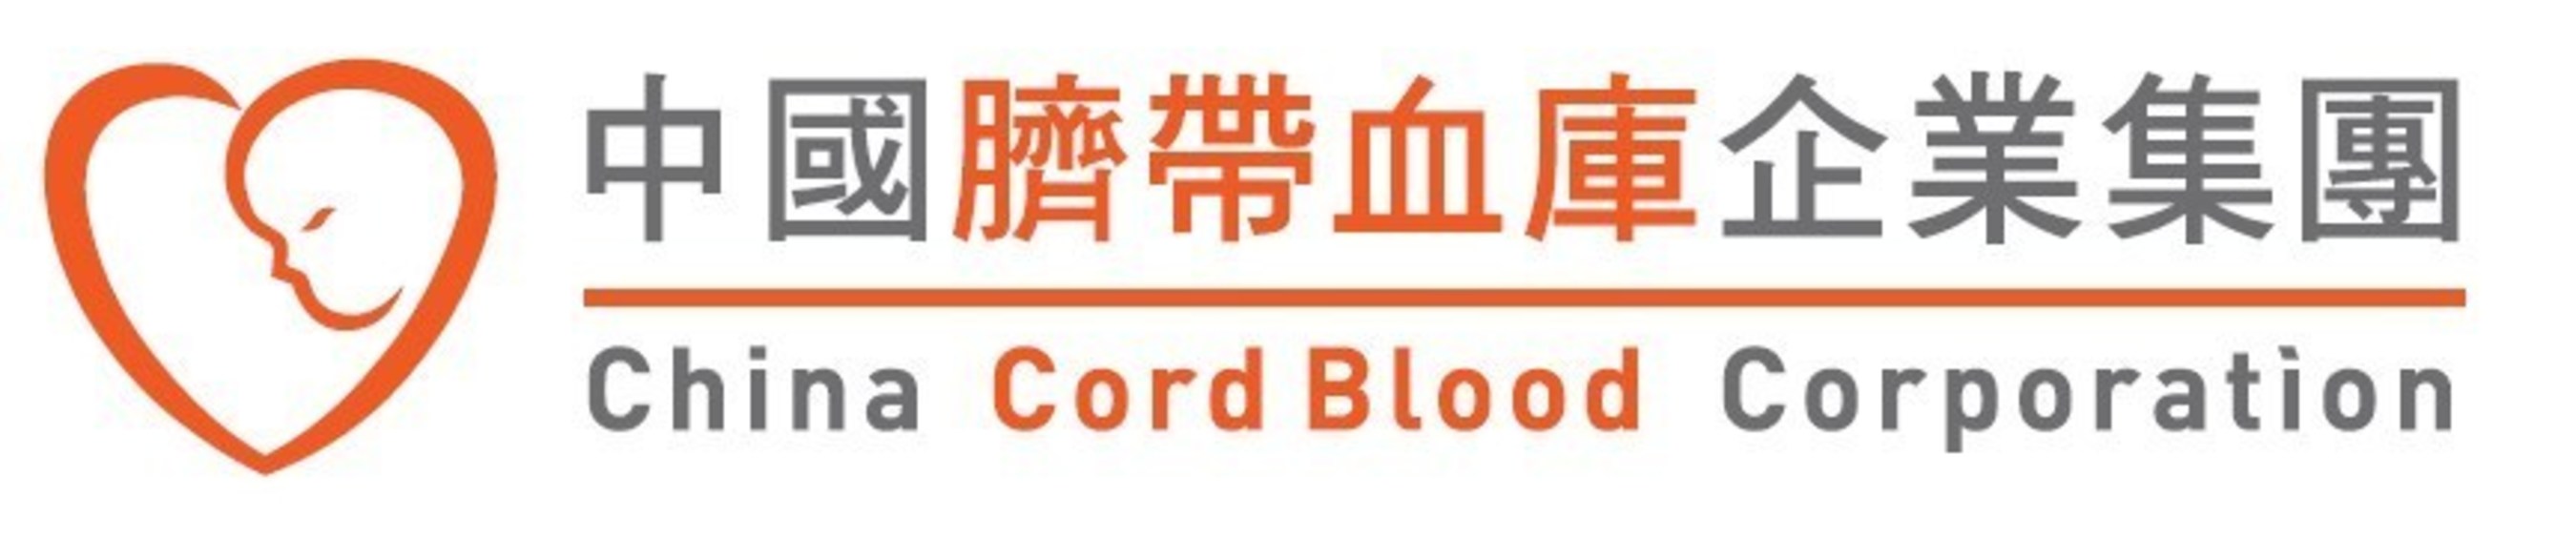 China Cord Blood Corporation (www.chinacordbloodcorp.com)